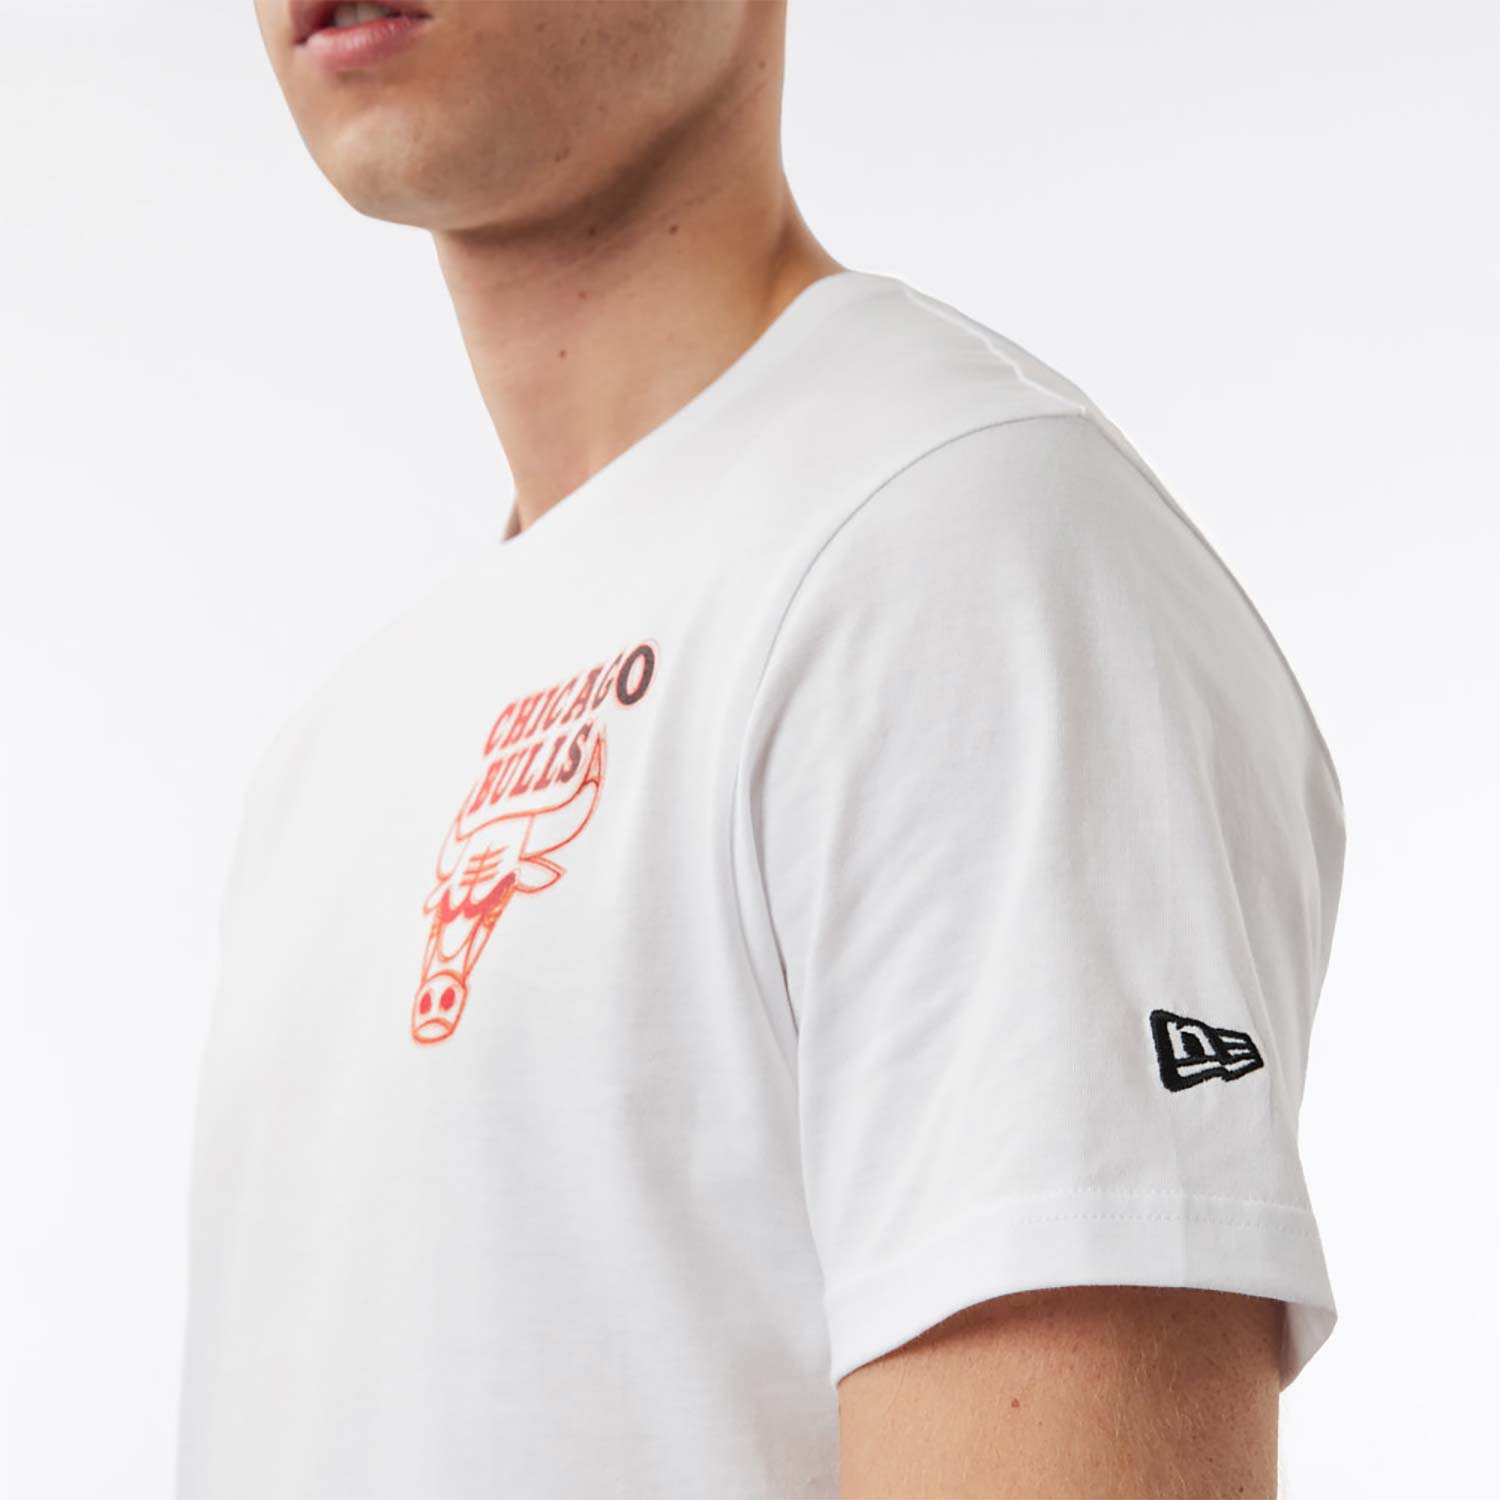 New Era Chicago Bulls T-Shirt White 60284676